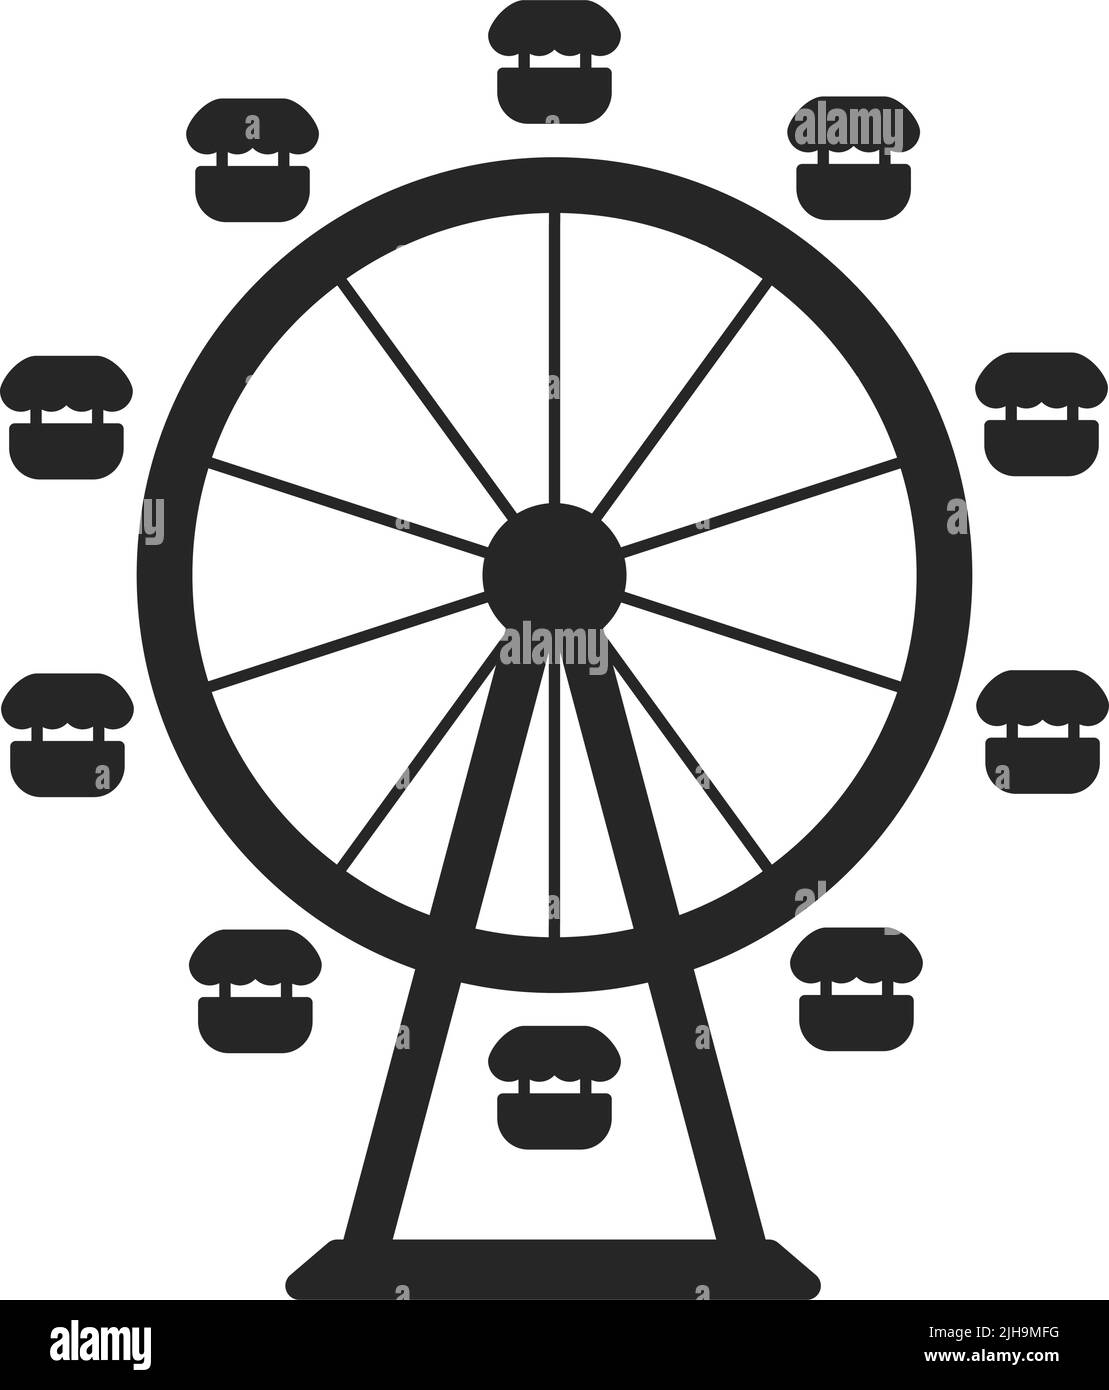 Ferris wheel for a fair or amusement park ride as a simple silhouette vector icon Stock Vector